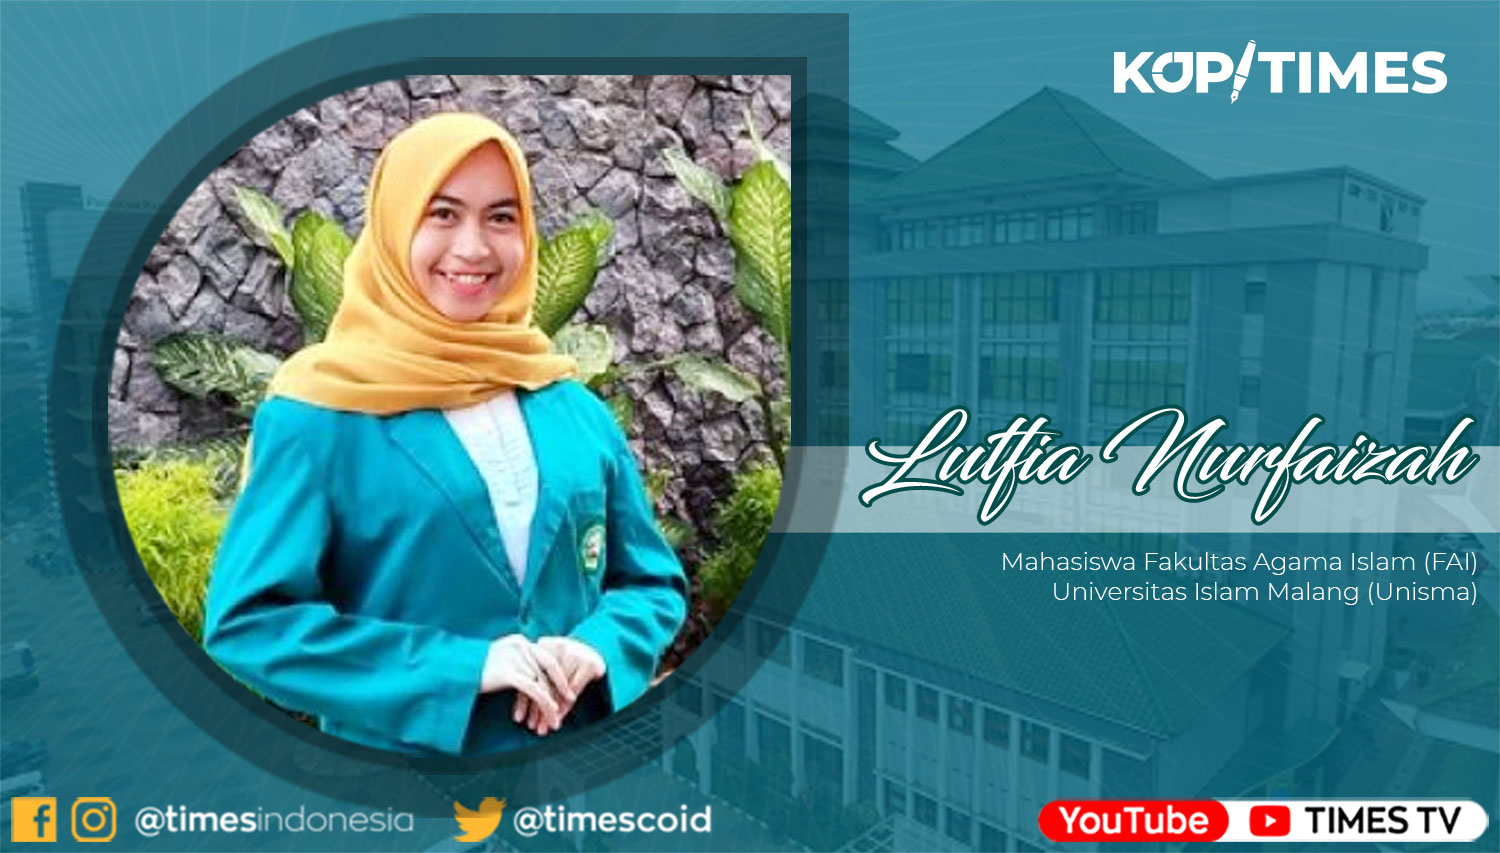 Lutfia Nurfaizah, Mahasiswa Fakultas Agama Islam (FAI) Universitas Islam Malang (Unisma).